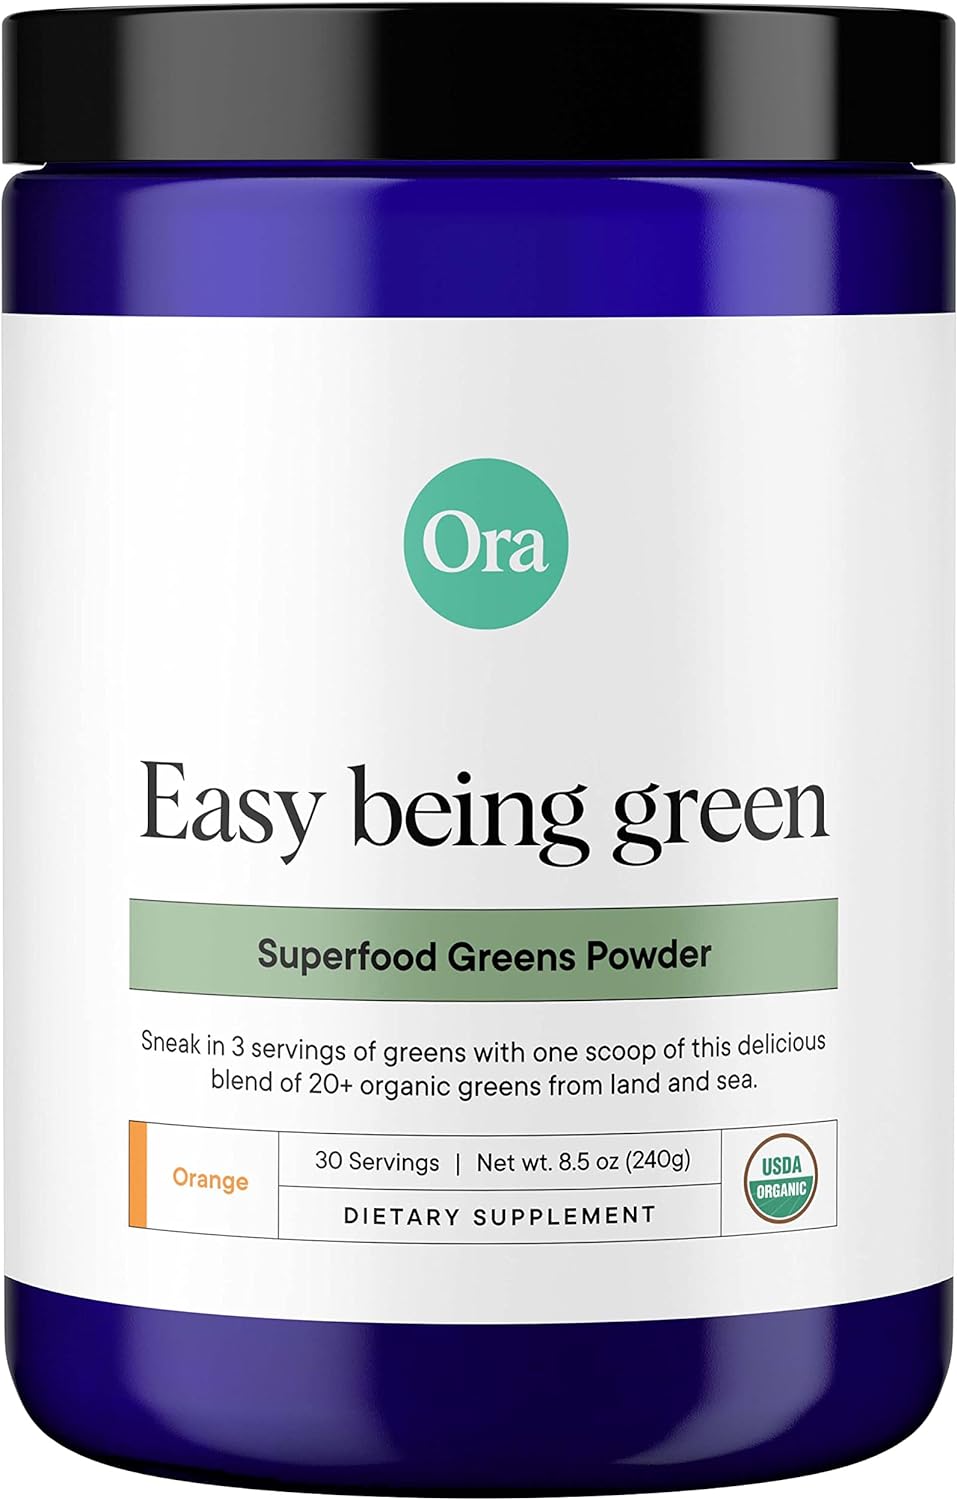 Ora Organic Greens Powder - Vegan, Gluten-Free, Organic Super Greens Drink for Energy and Detox | Antioxidants Adaptogenic Herbs | 20+ Superfood Greens Blend - Citrus Flavor, 30 Servings